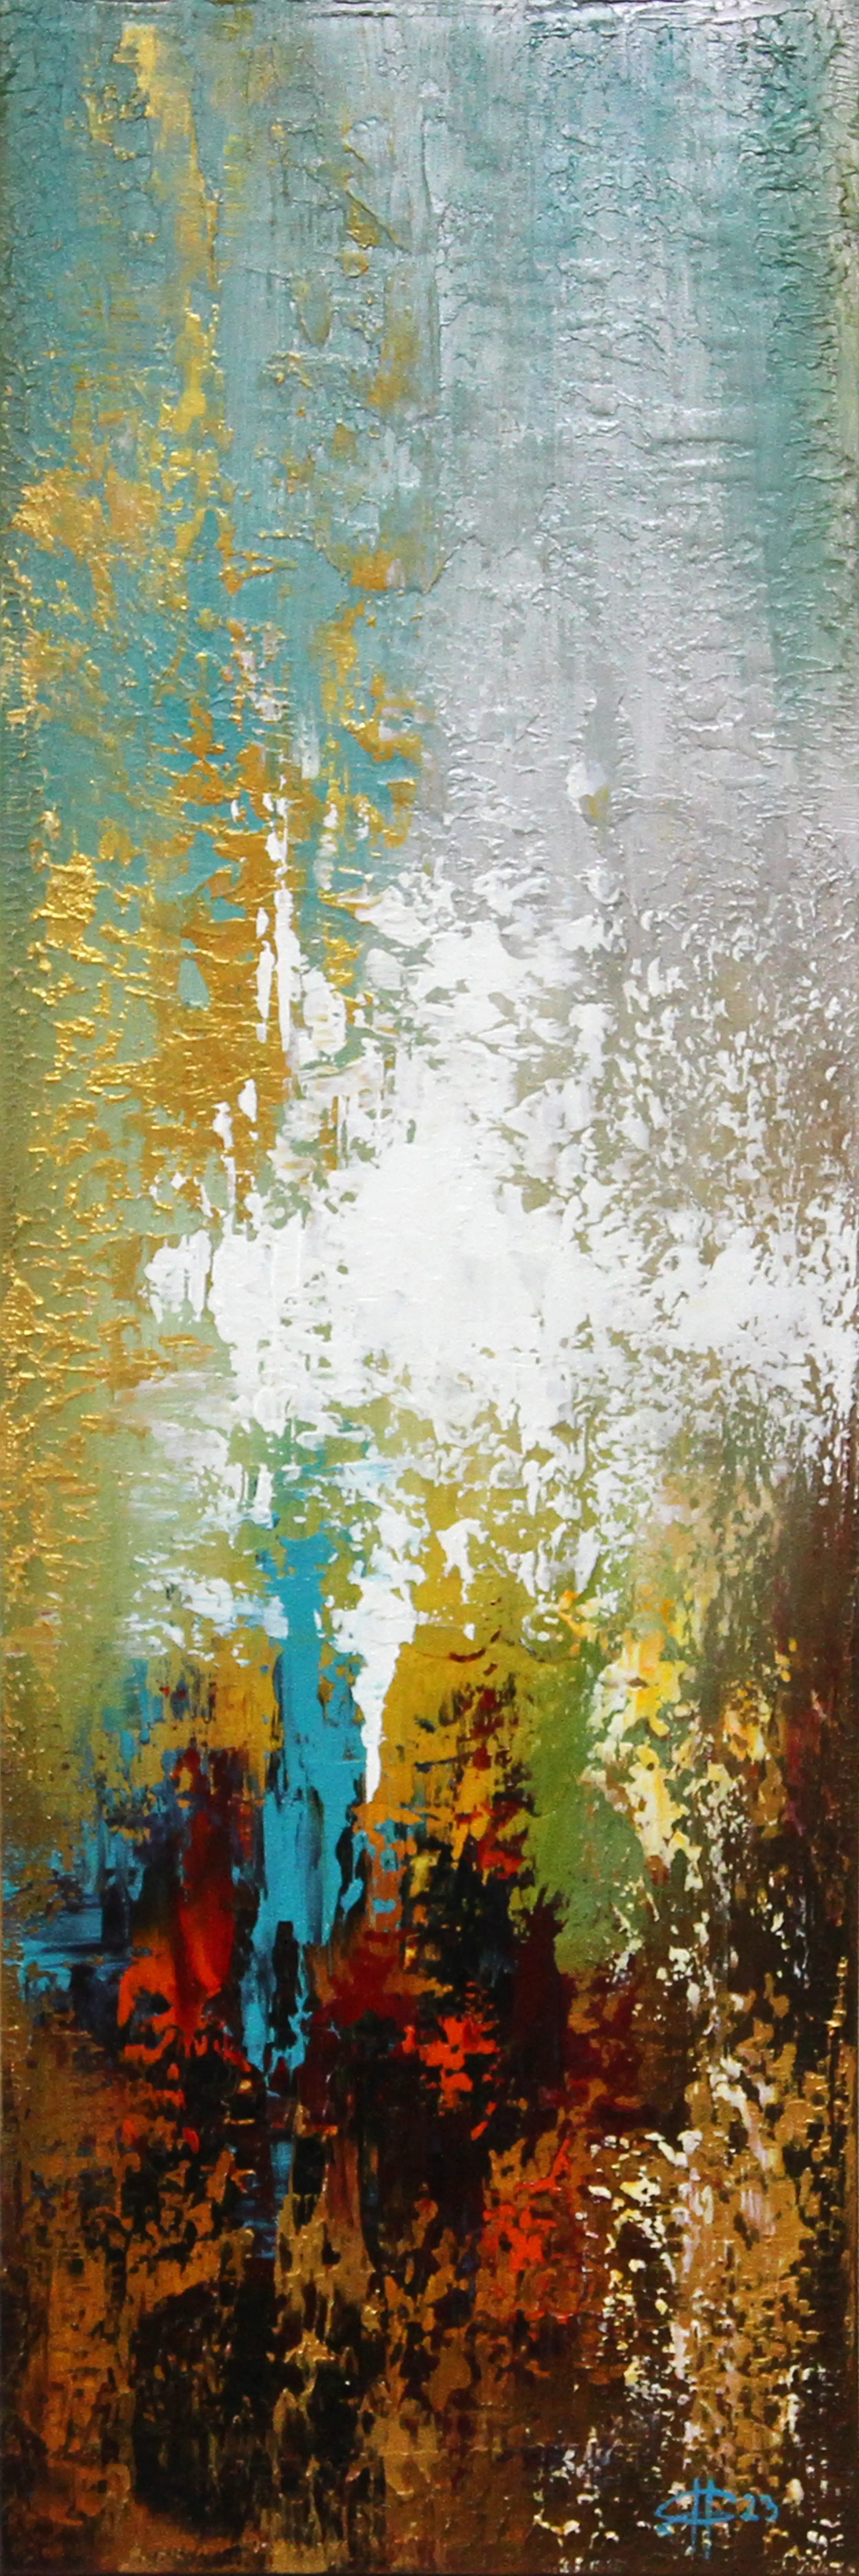 Originalgemälde: "Abstract Landscape III", G. Hung, Unikat